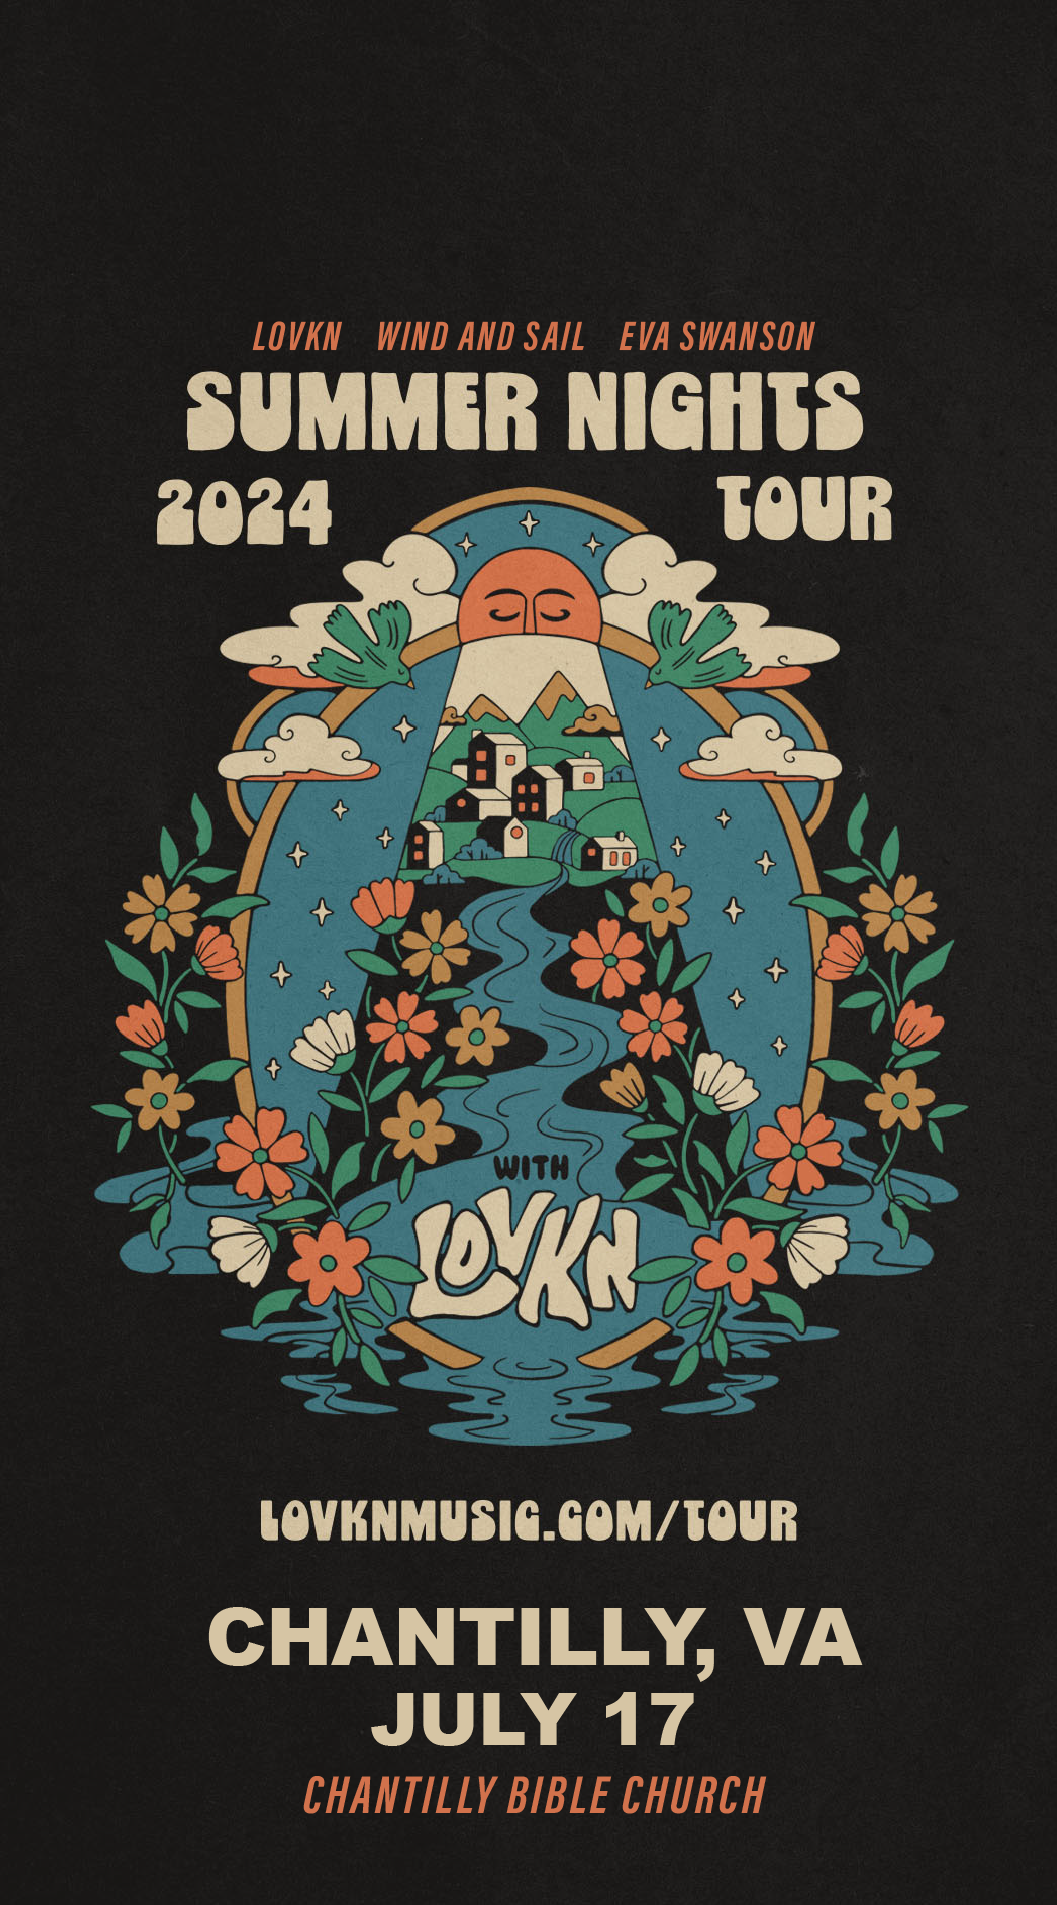 Chantilly, VA | July 17 | LOVKN Summer Nights Tour 2024 (w/Wind and Sail, Eva Swanson)